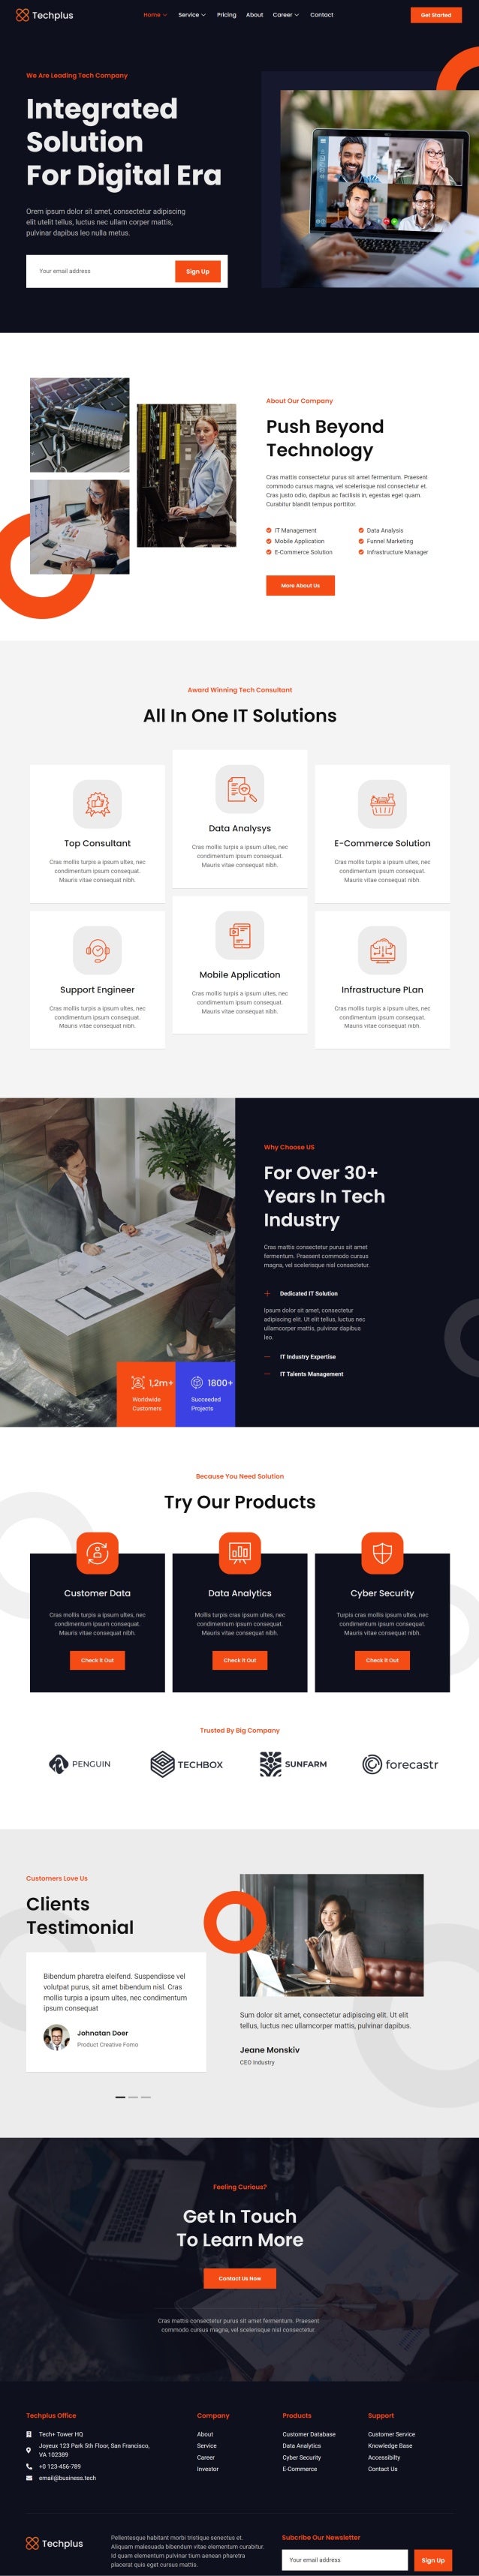 Clean & Modern Wordpress Digital Business Website Design and Creation By Elementor Pro - ⭐ON SALE⭐